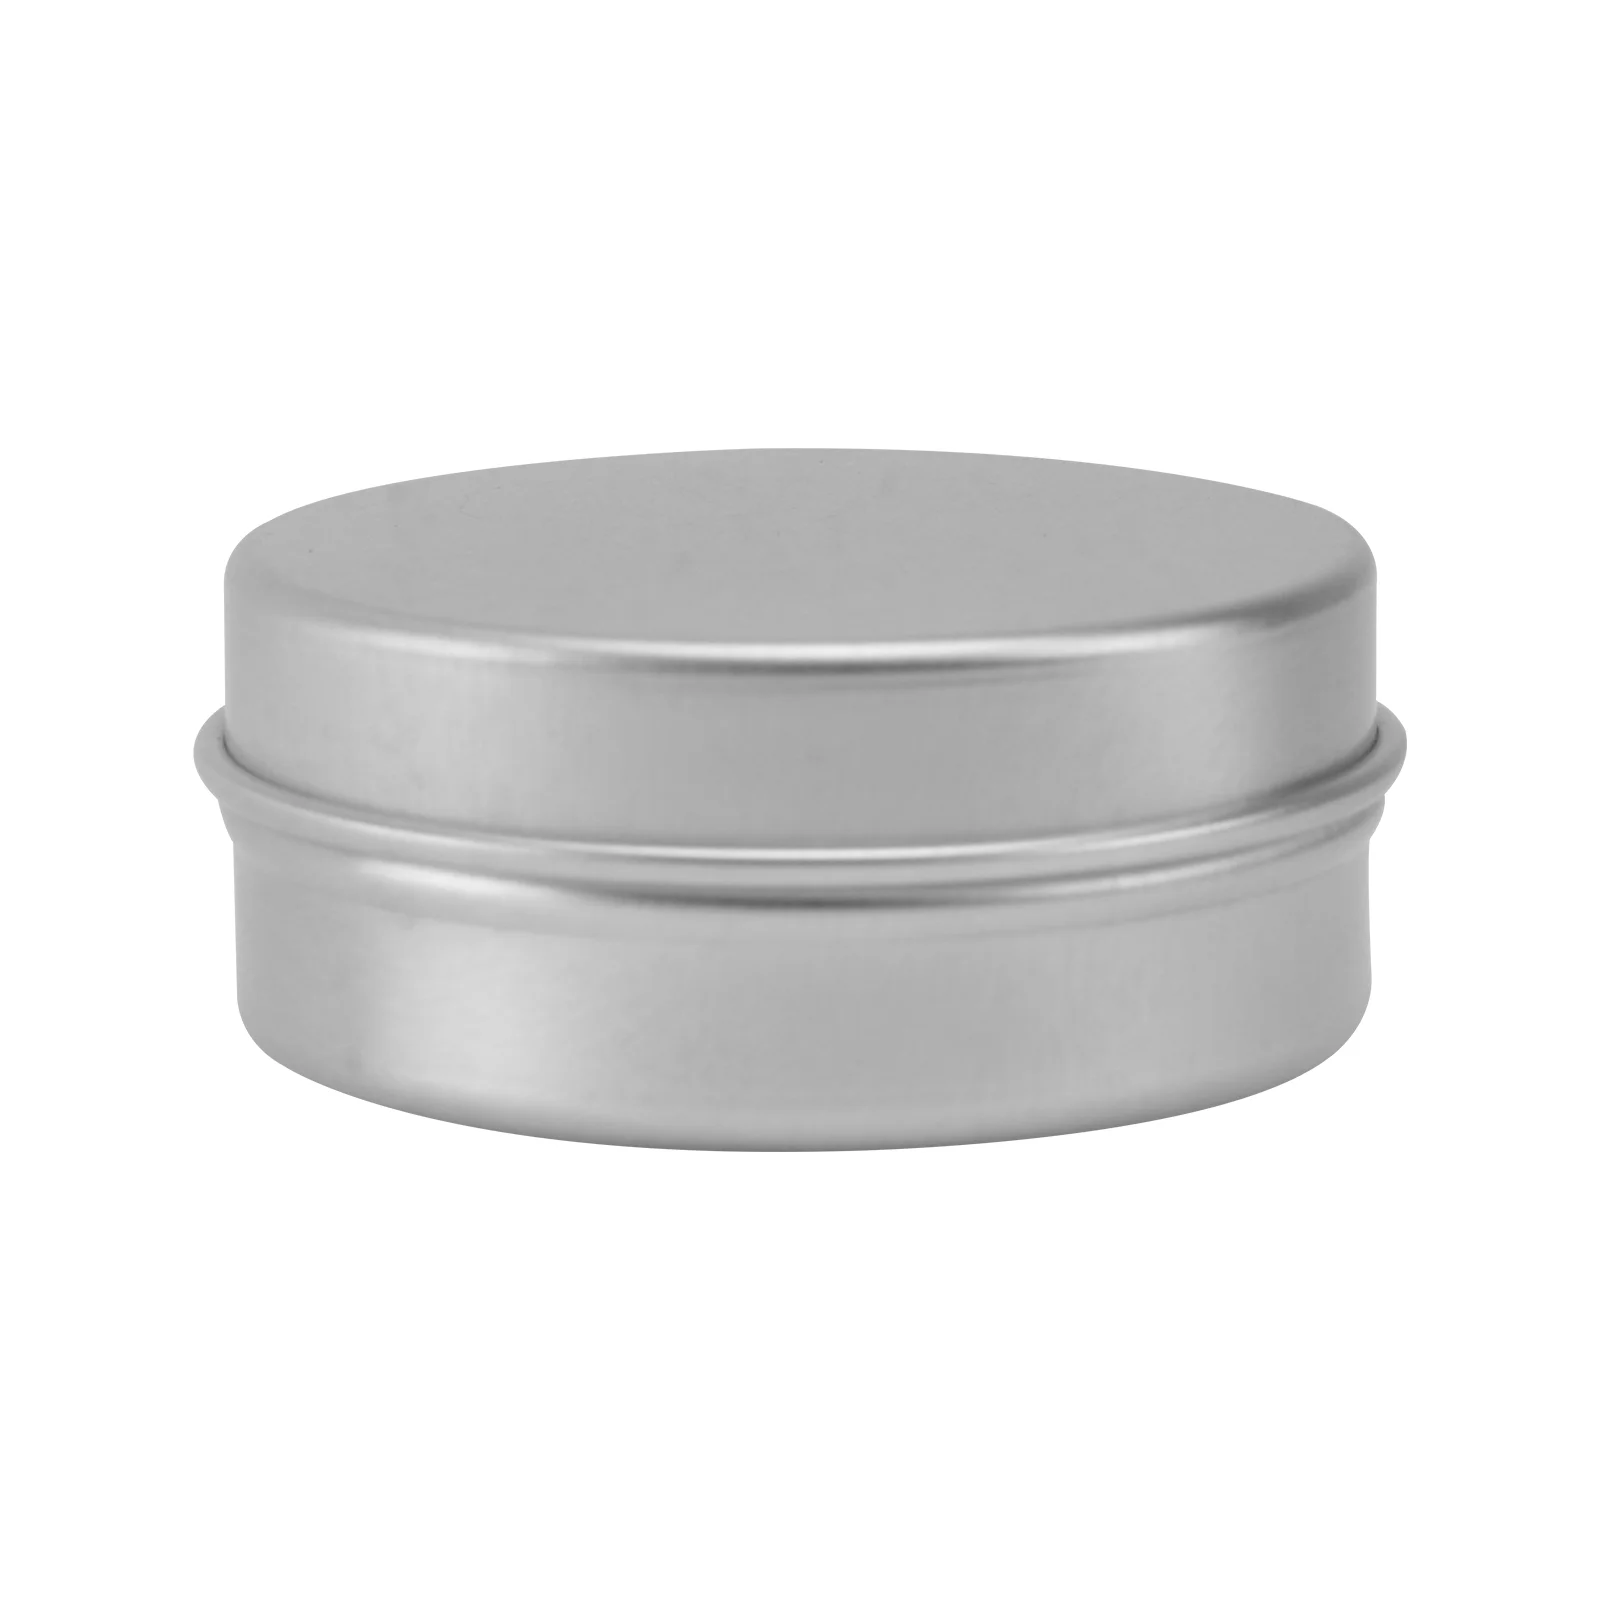 

Jars Tin Travel Jar Tins Aluminum Cream Cans Metal Lids Empty Round Creams Aluminium Box Storage Container Toiletries Containers